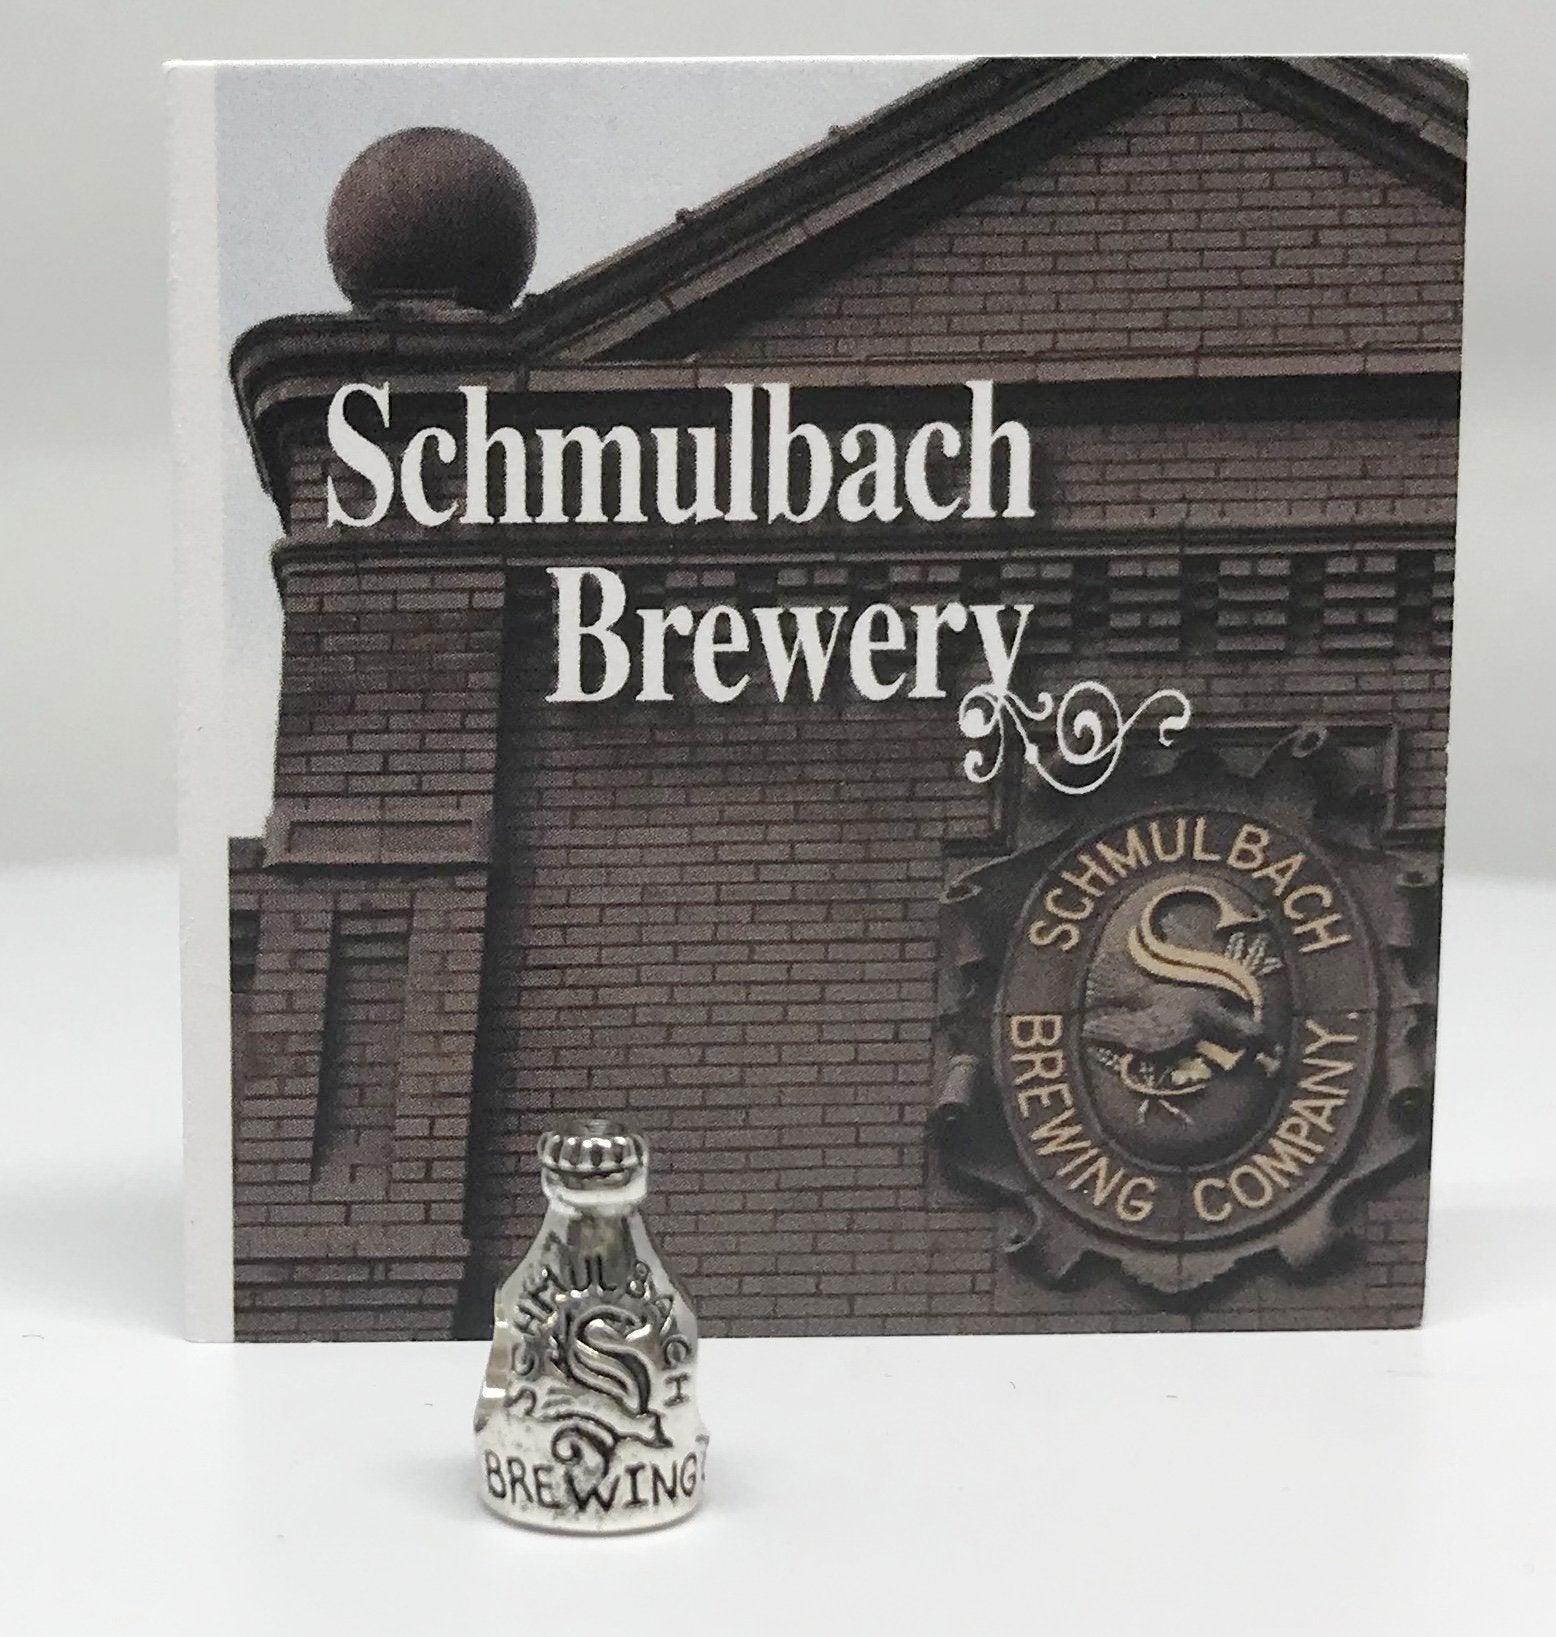 Schmulbach Brewery Bead-Howard's Exclusive-Howard's Diamond Center